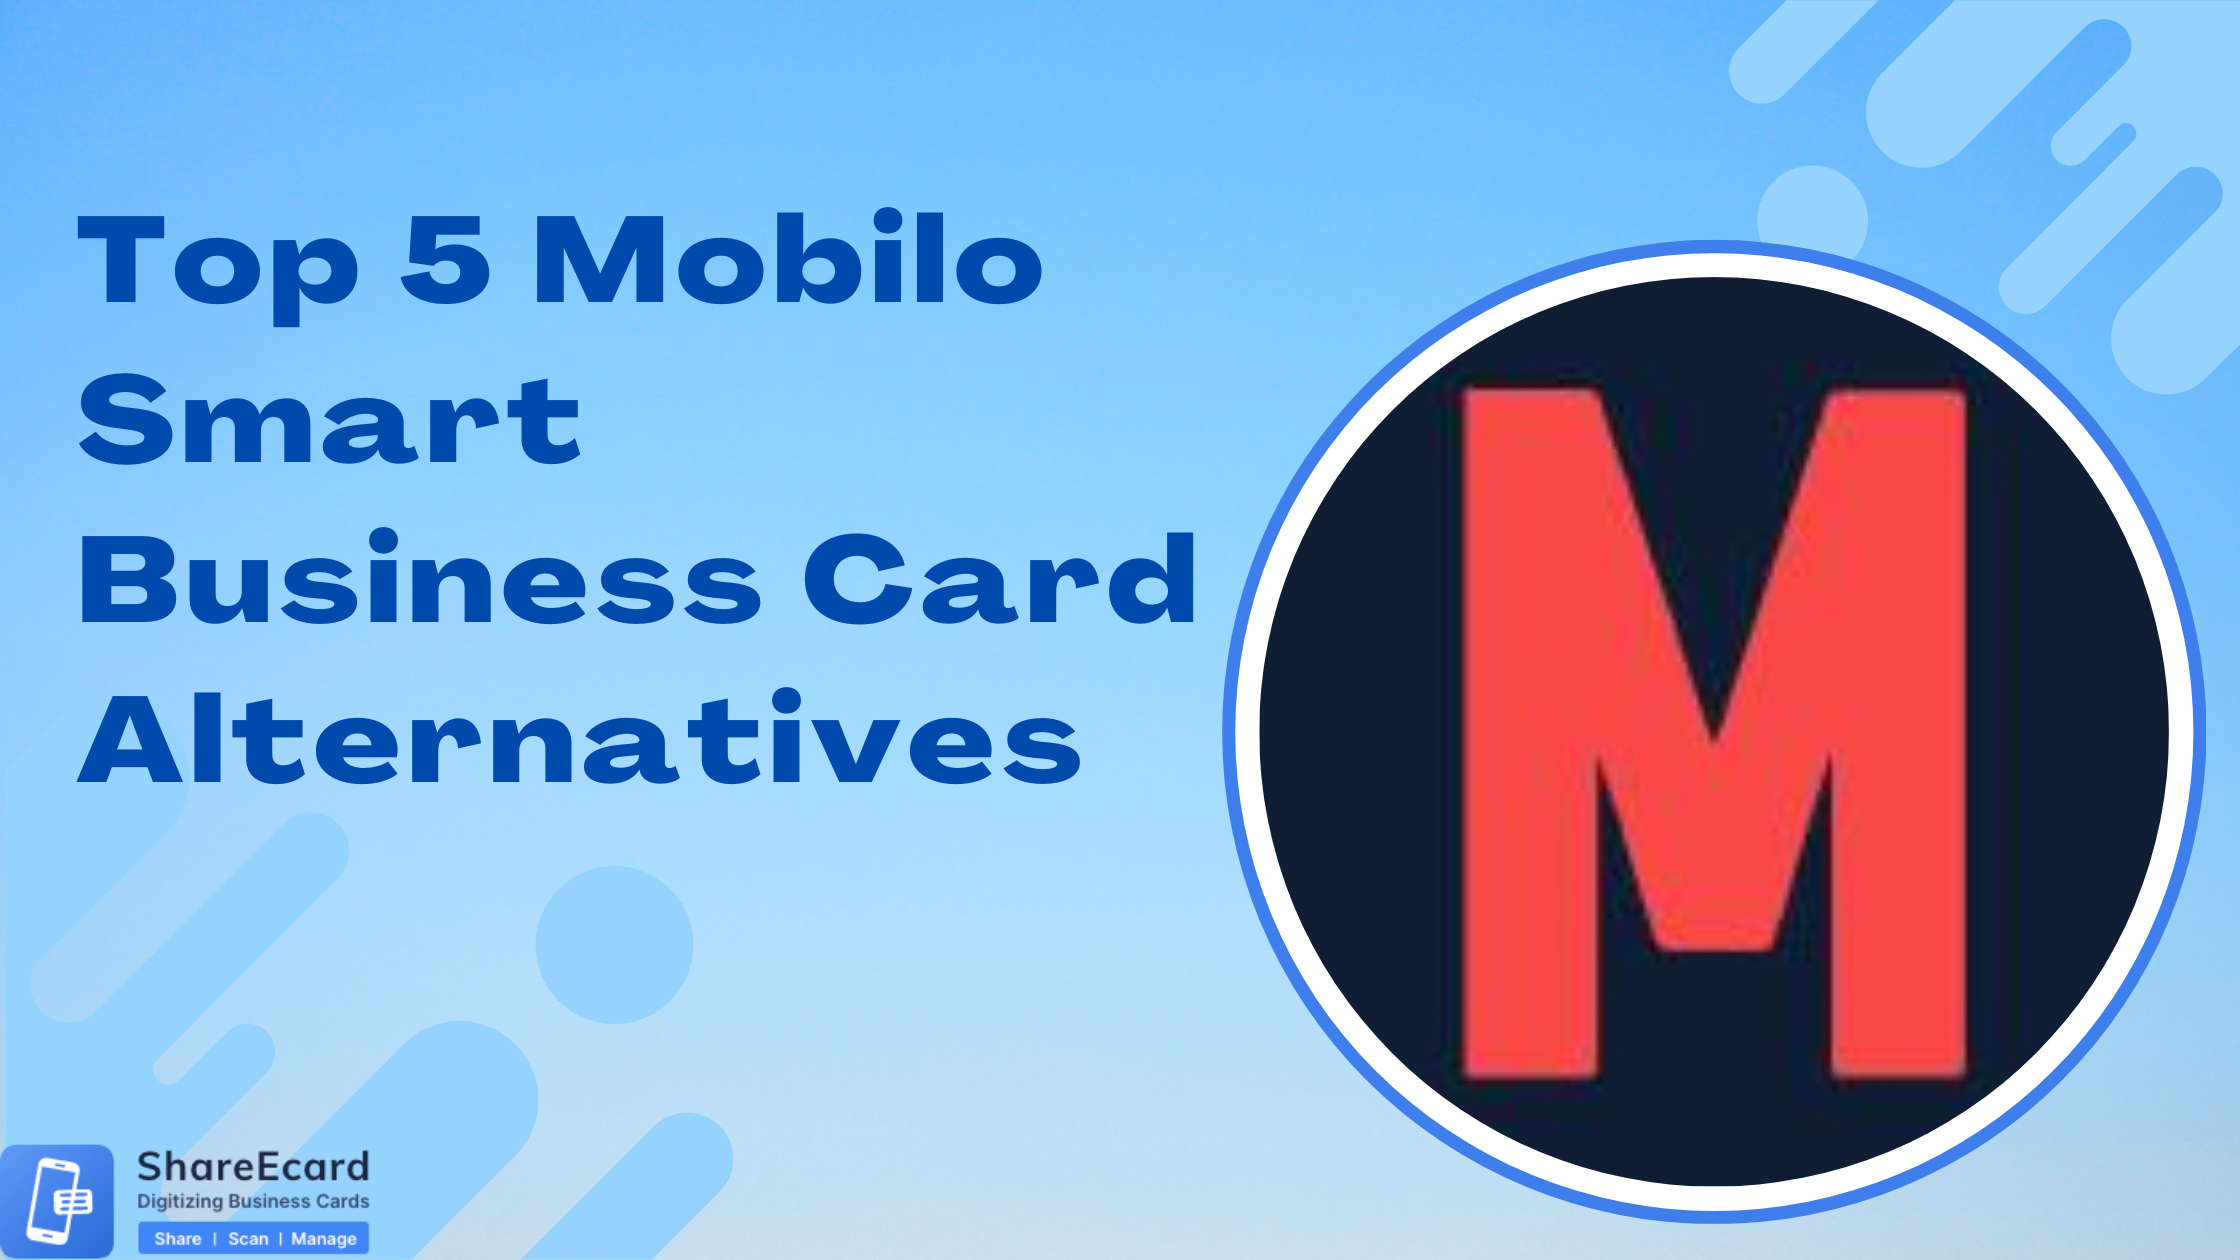 Top 5 Mobilo Smart Business Card Alternatives